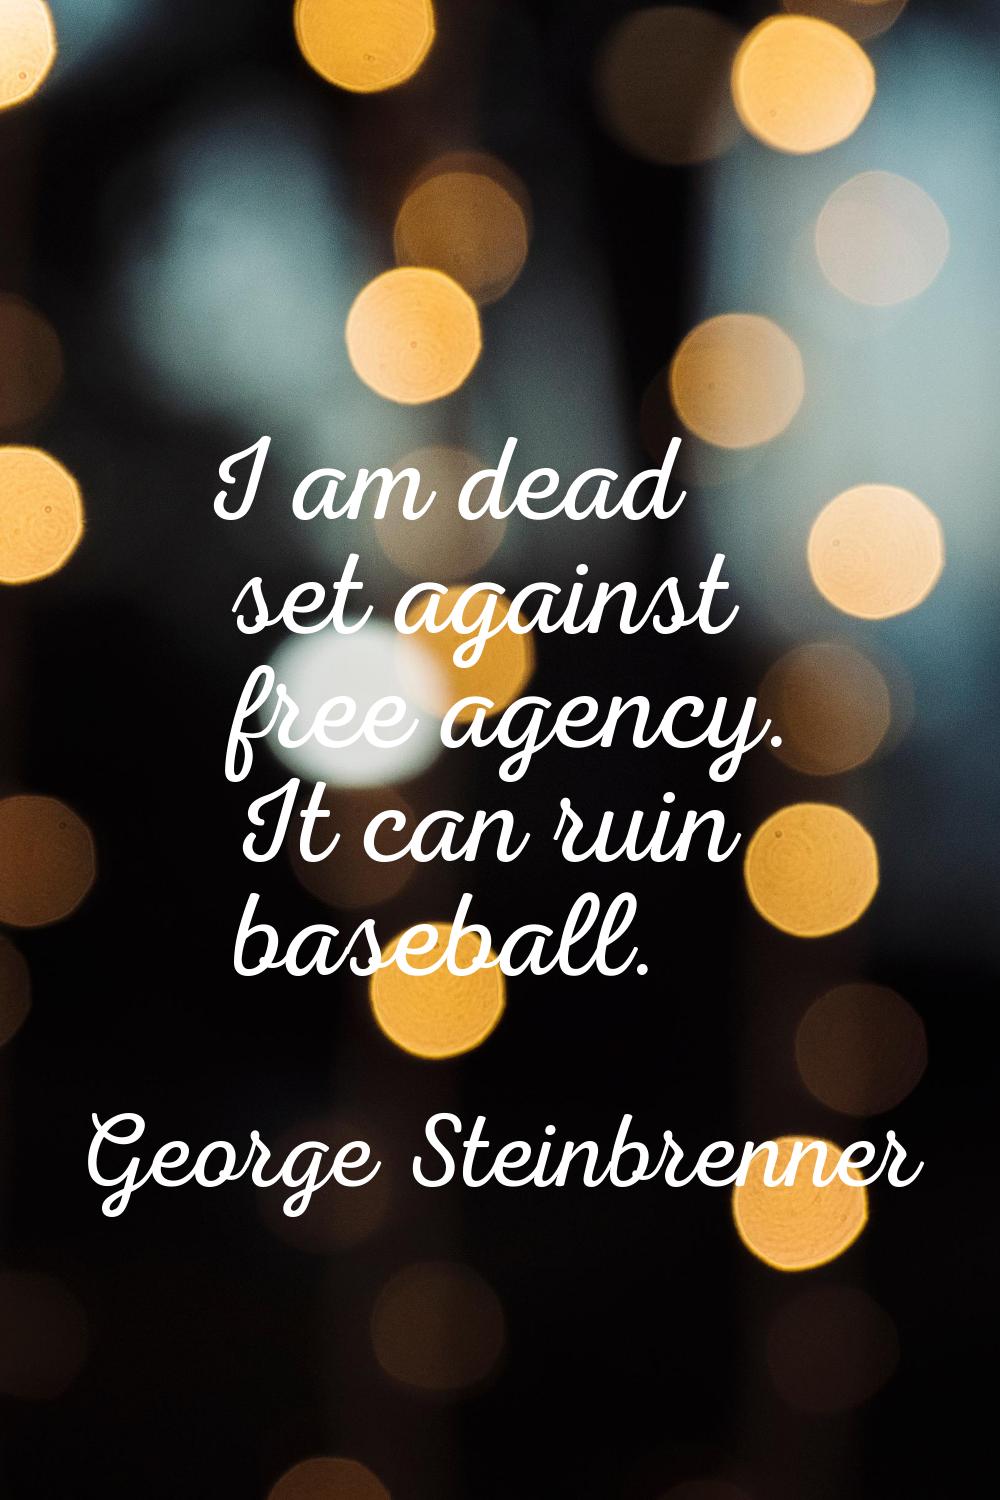 I am dead set against free agency. It can ruin baseball.